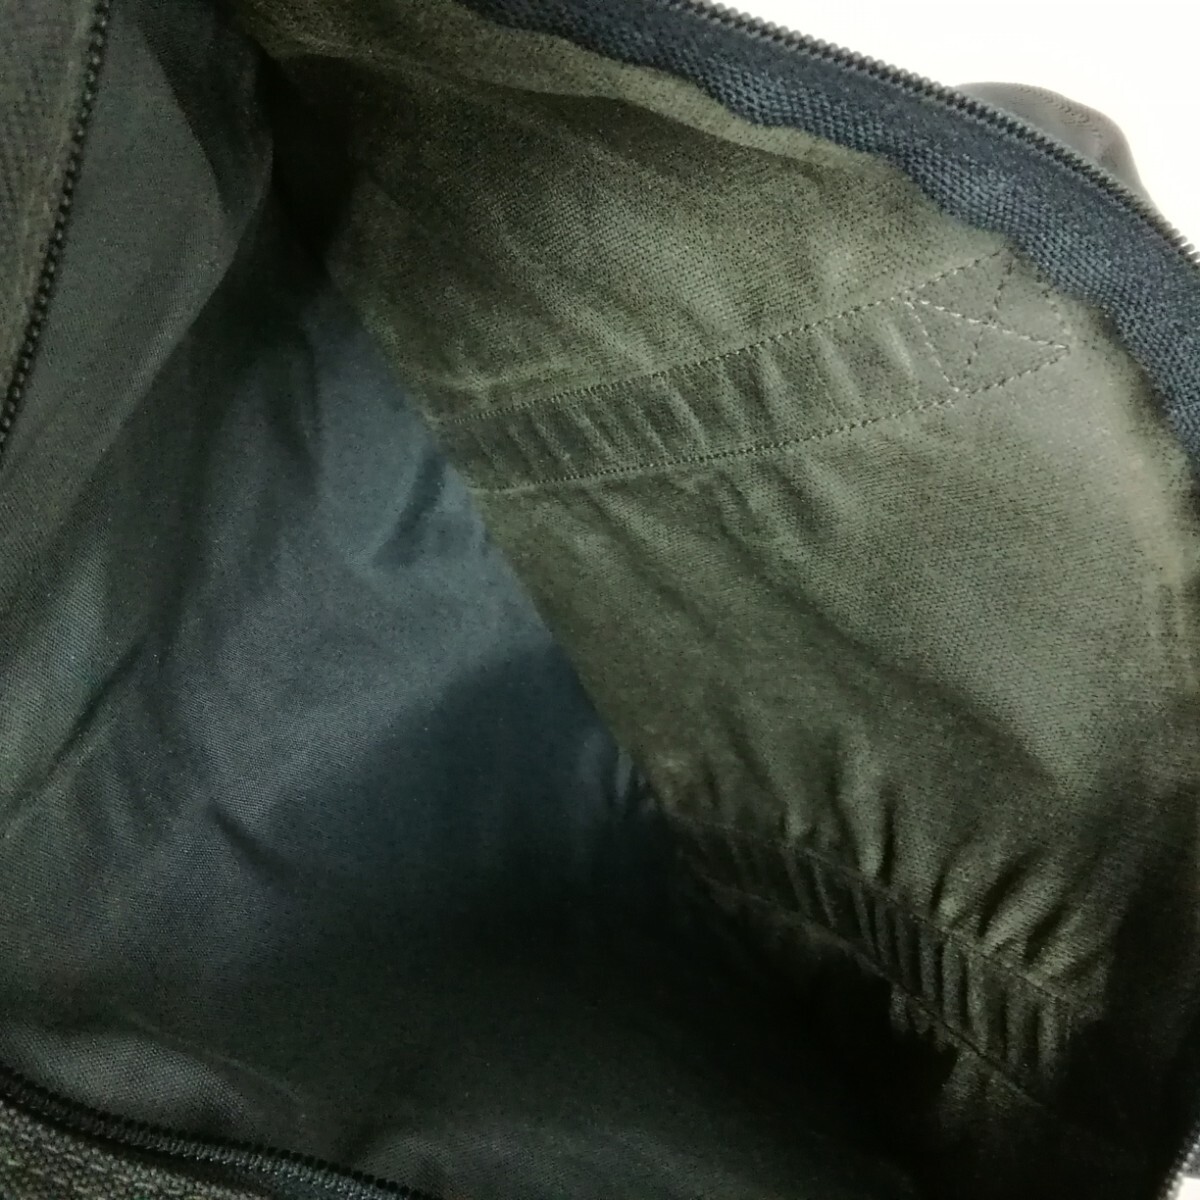 PORTER Porter Yoshida bag bag back bag black TENSION tension tote bag 